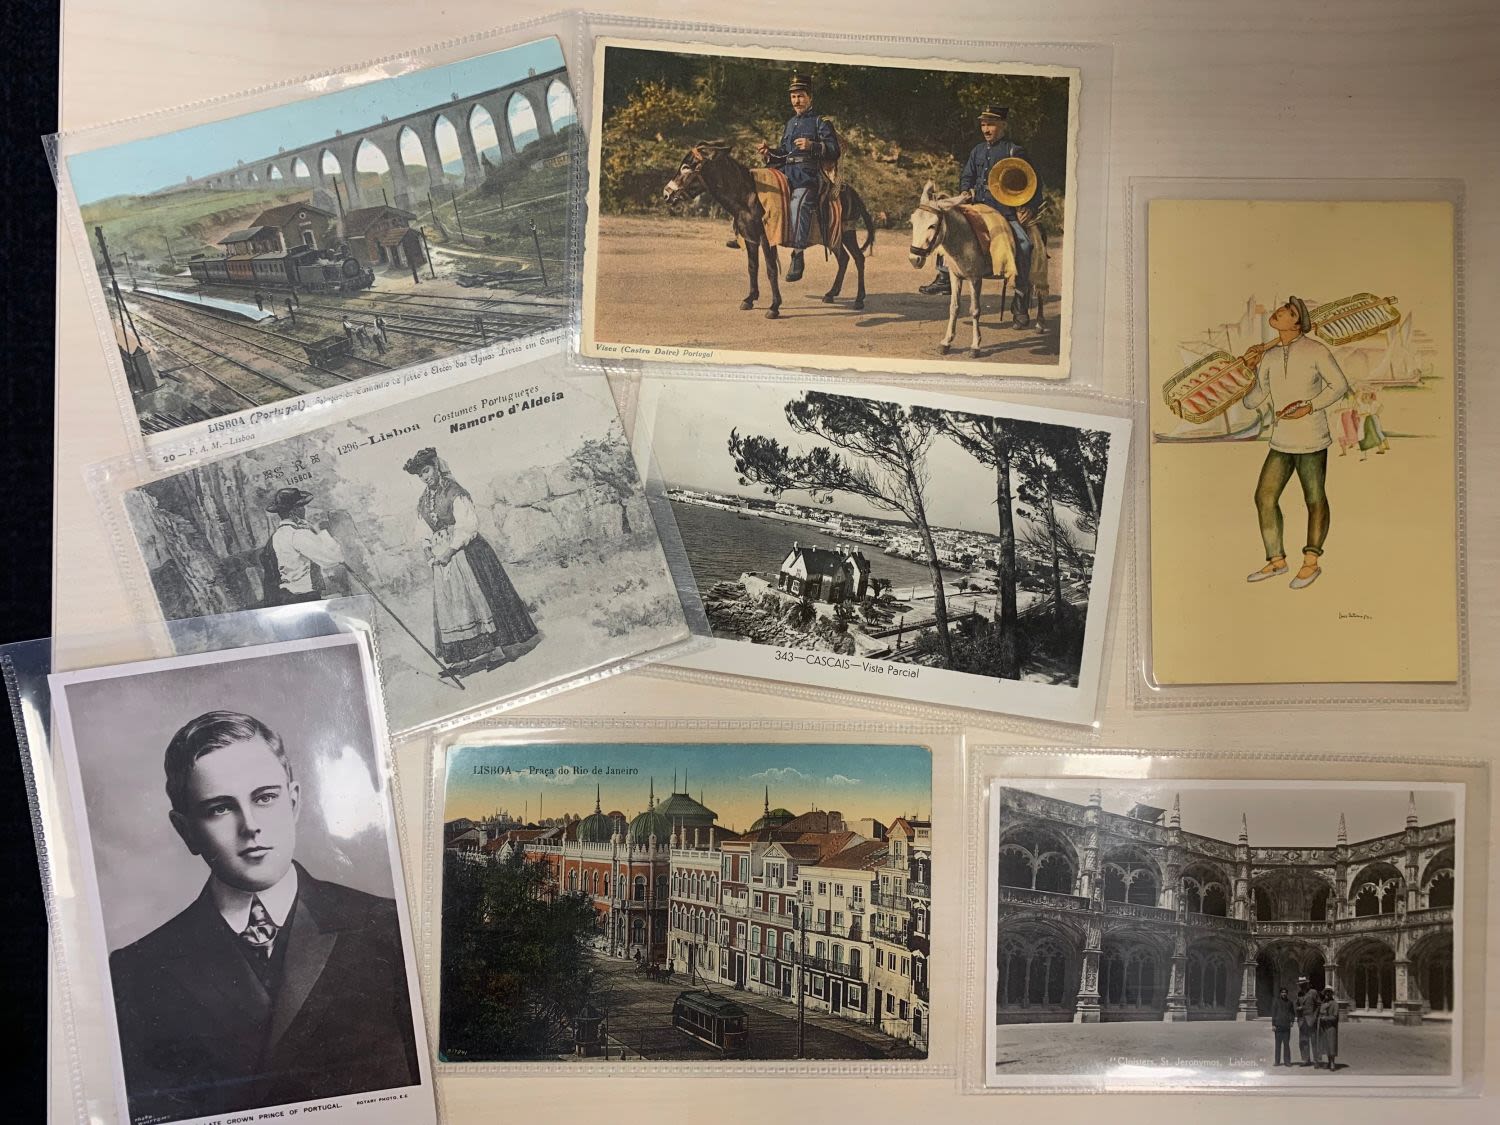 Portugal Postcards. Vintage varied subjects 18 postcards